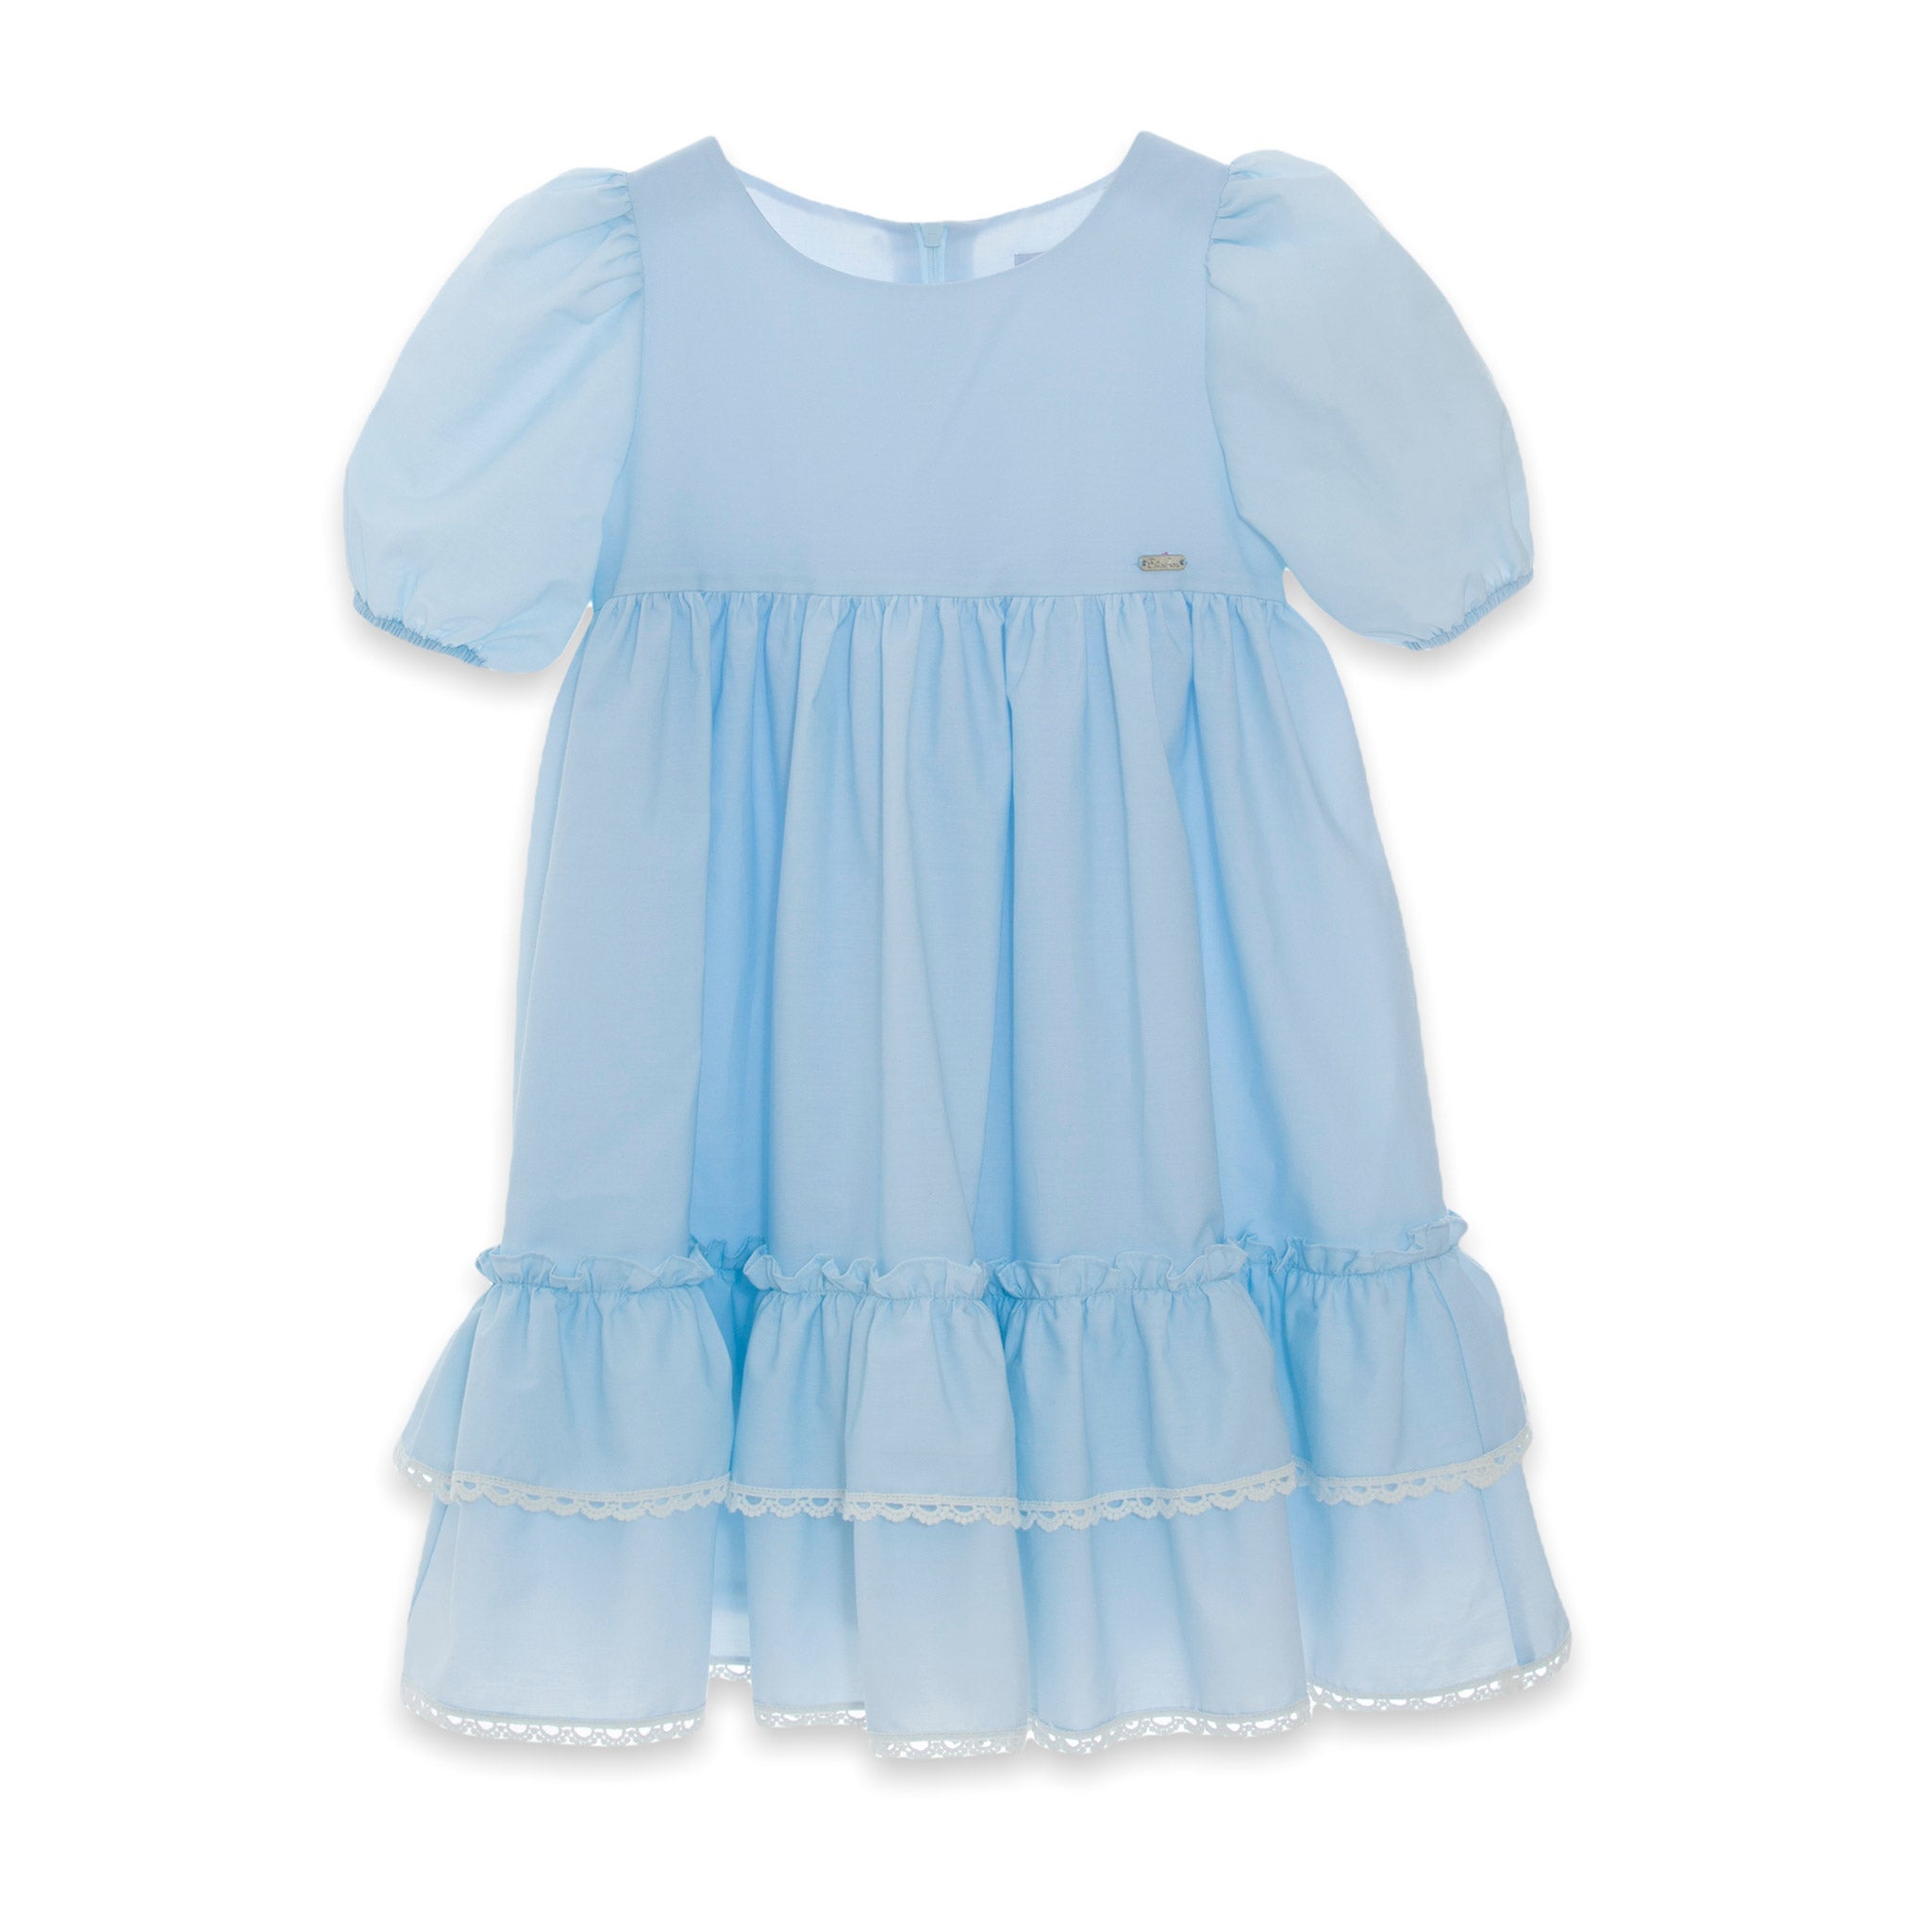 patachou girls blue cotton dress